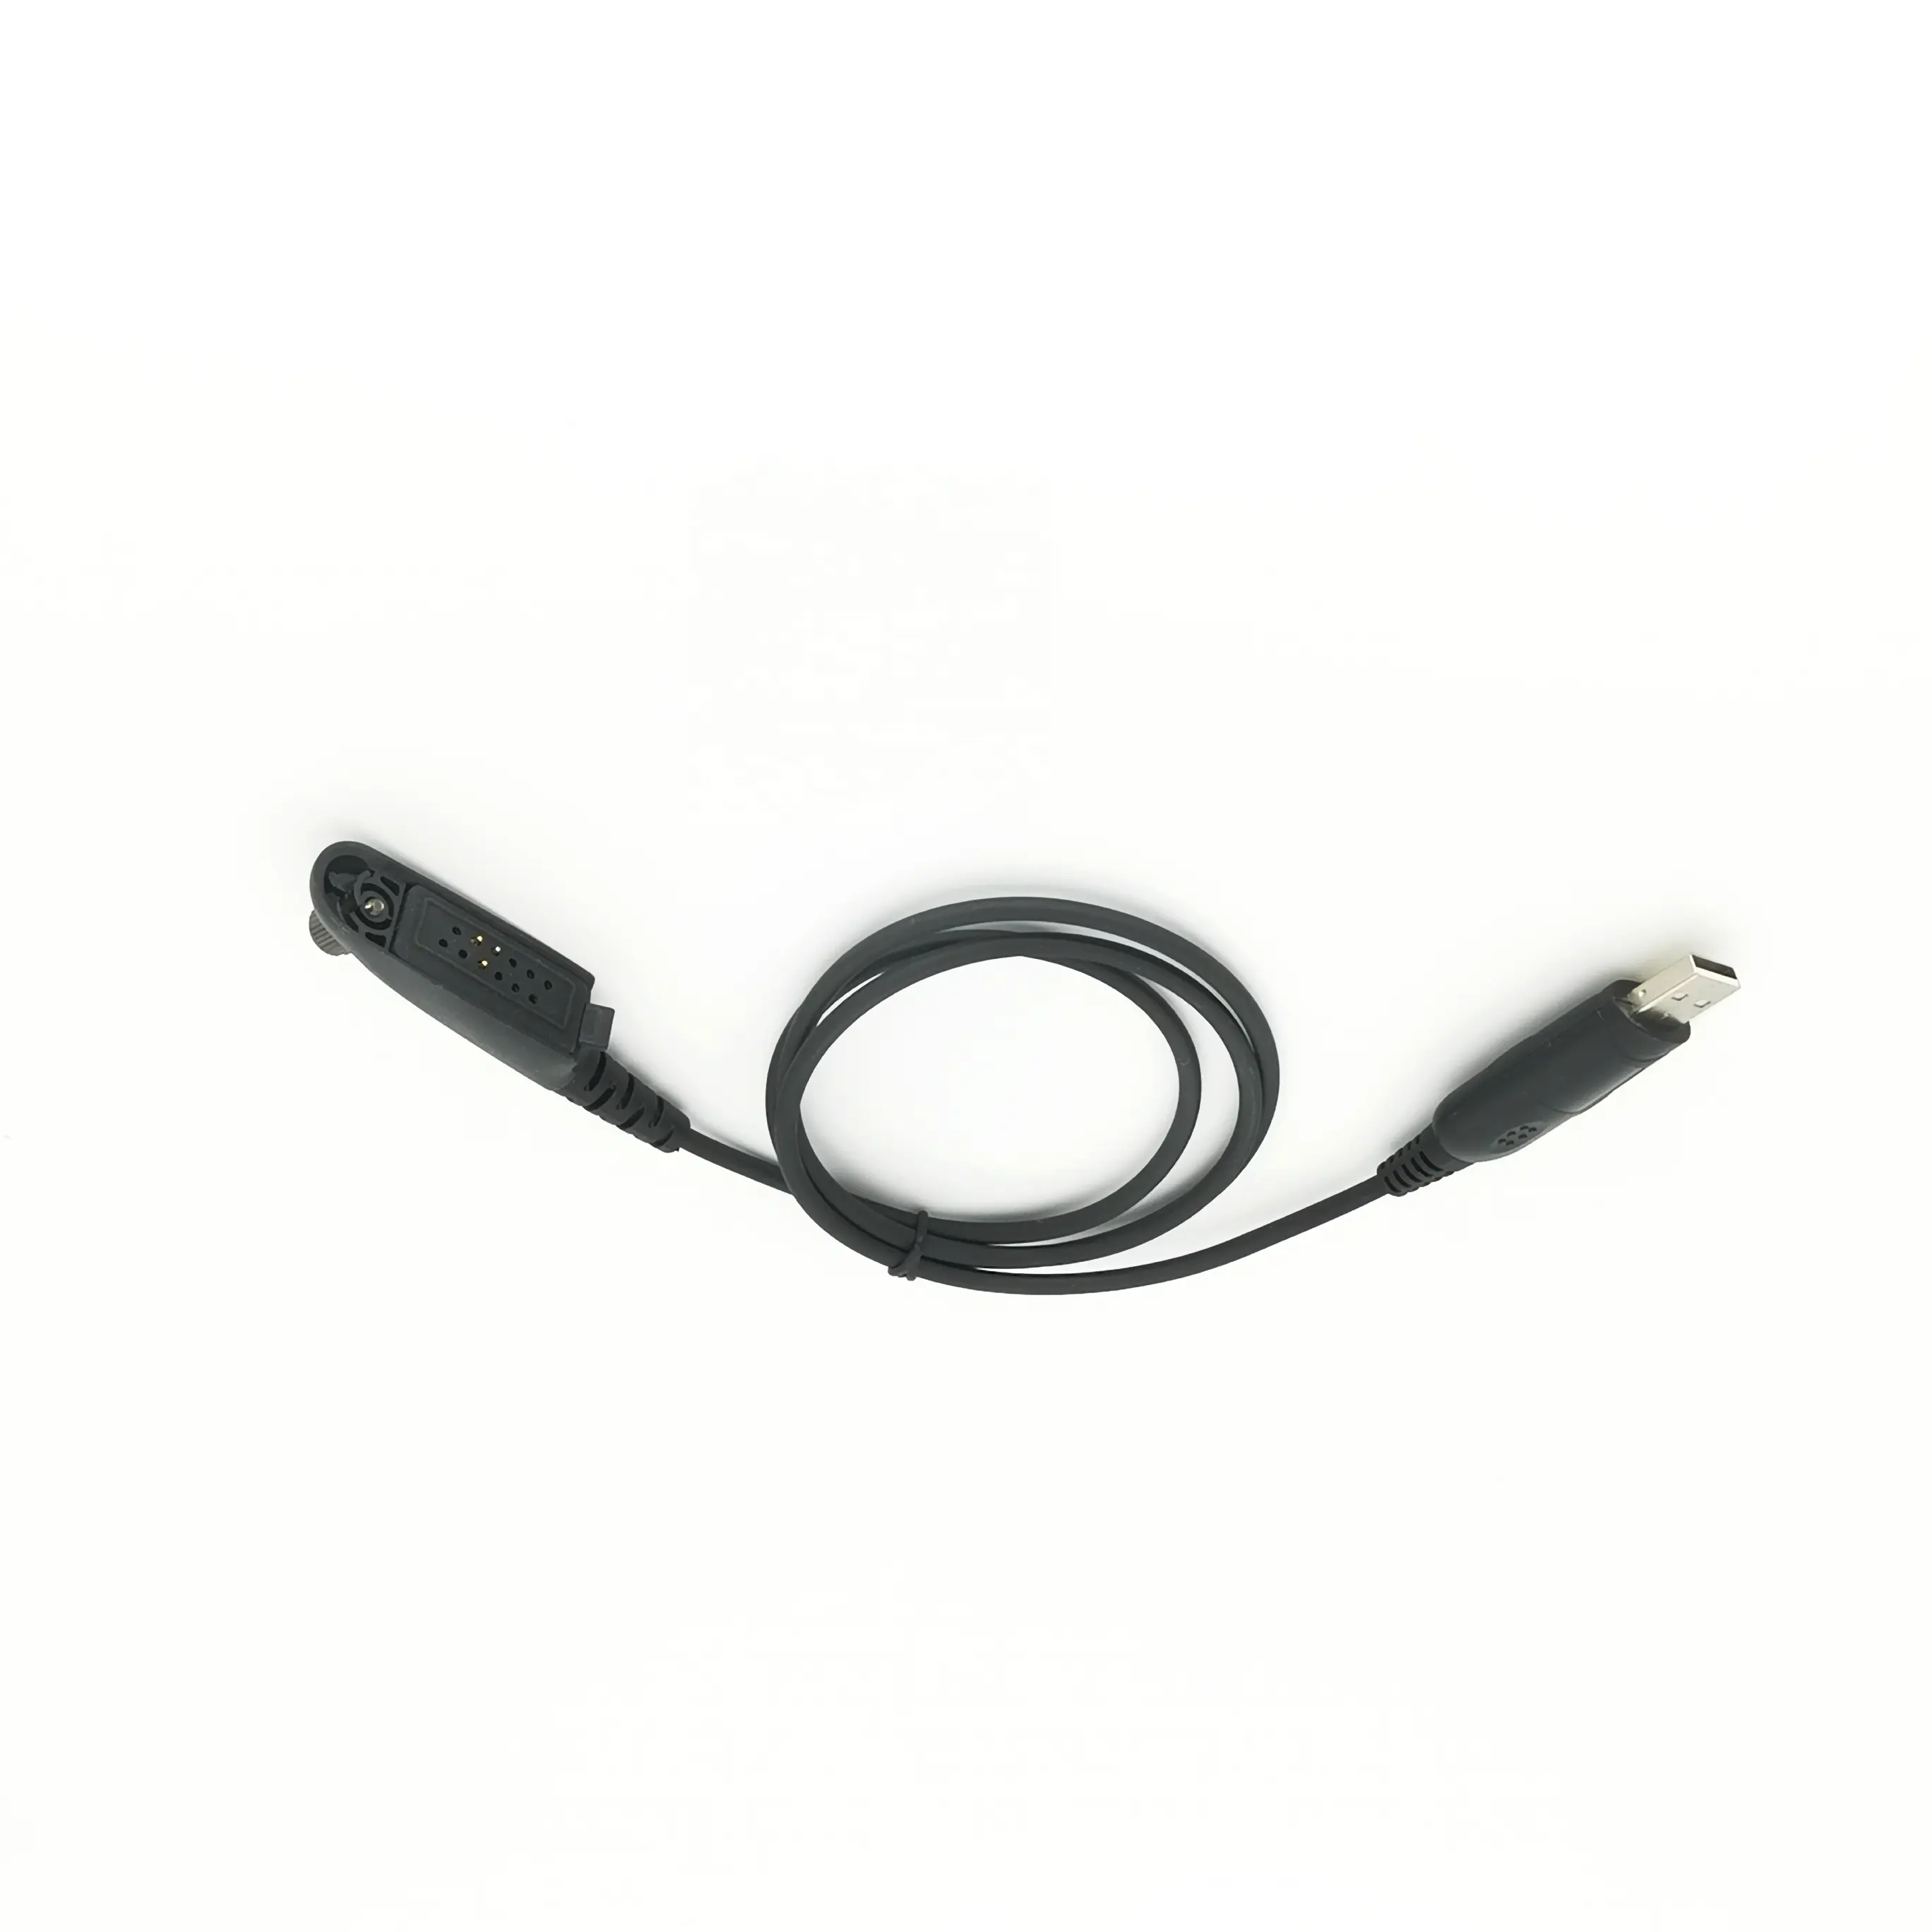 GP328 USB Кабель для программирования Motorola HT750 HT1250 PRO5150 GP340 GP380 GP640 GP680 GP960 GP1280 PR860 держатель рации